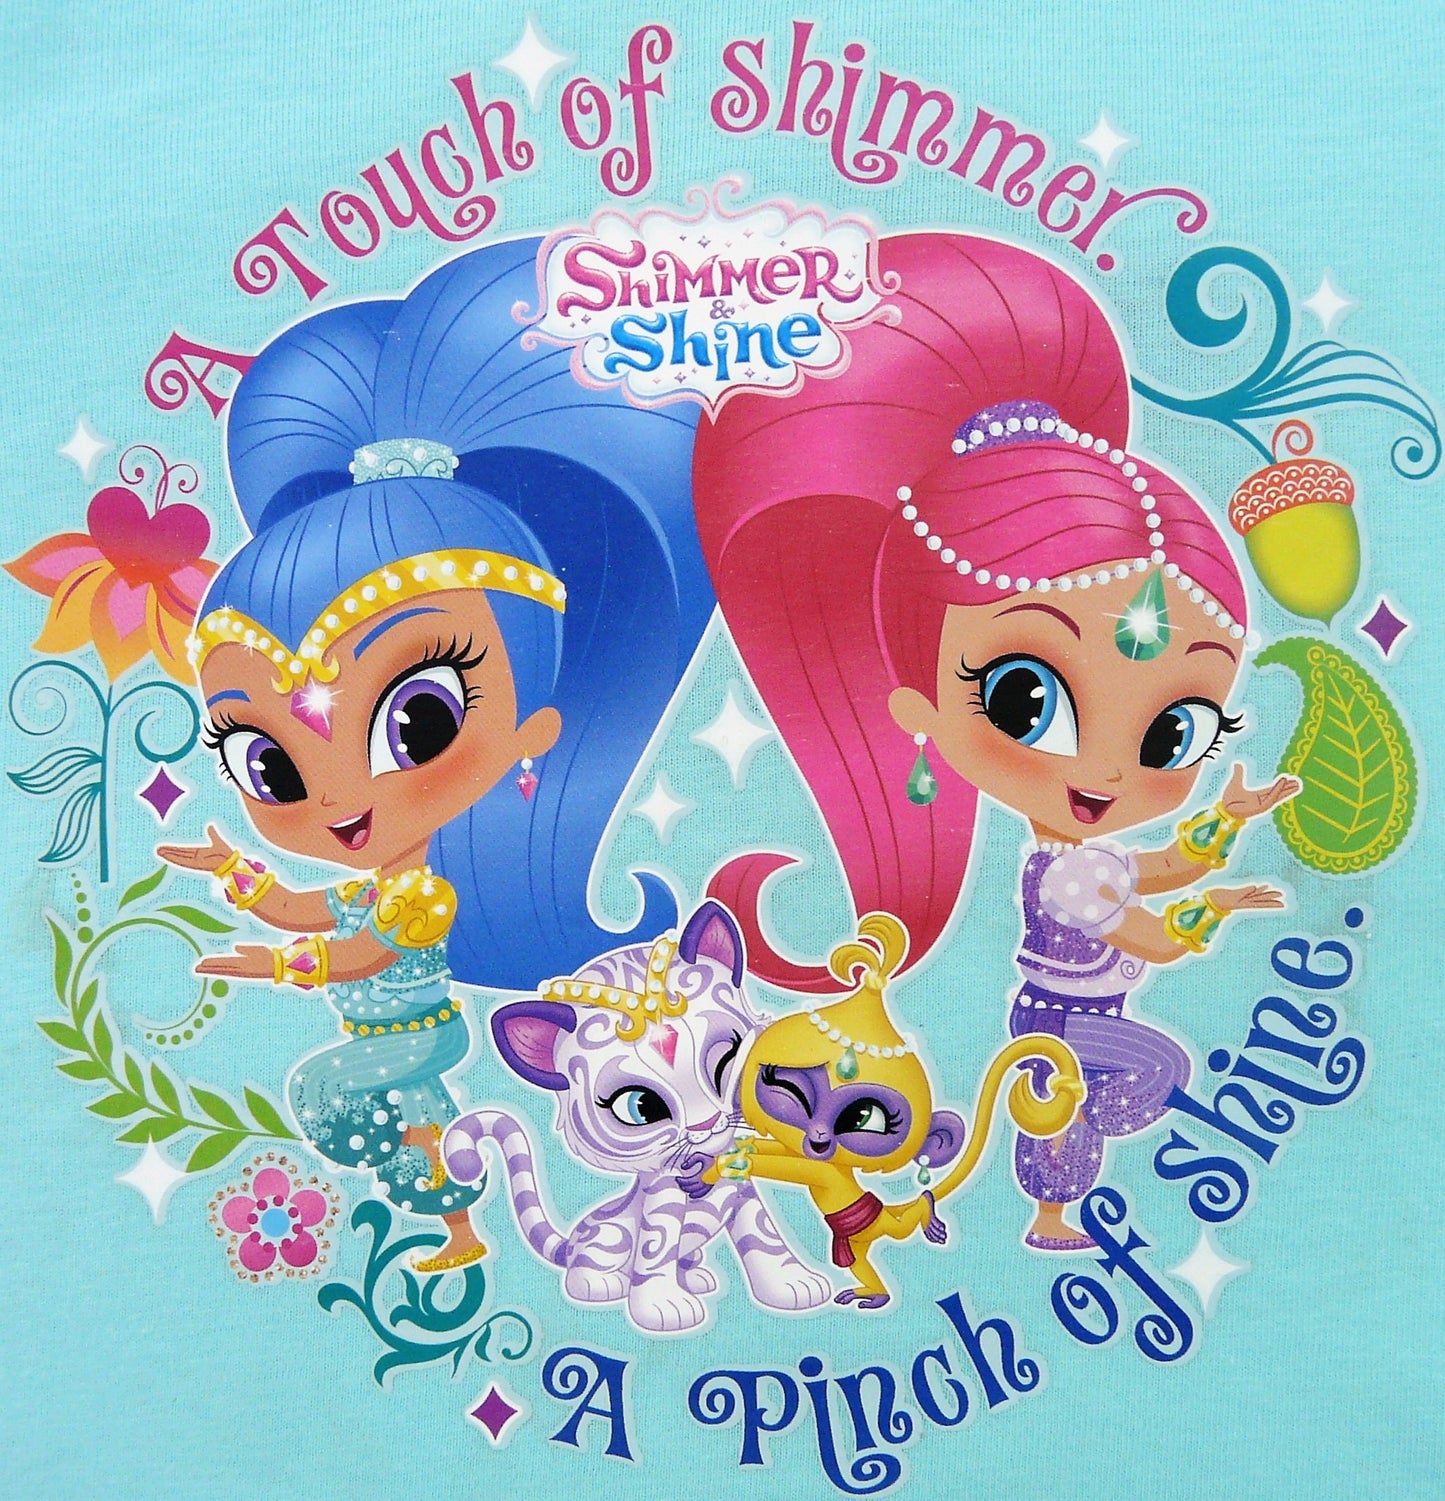 Shimmer & Shine Girls 100% Cotton 2-Piece Pyjama Set